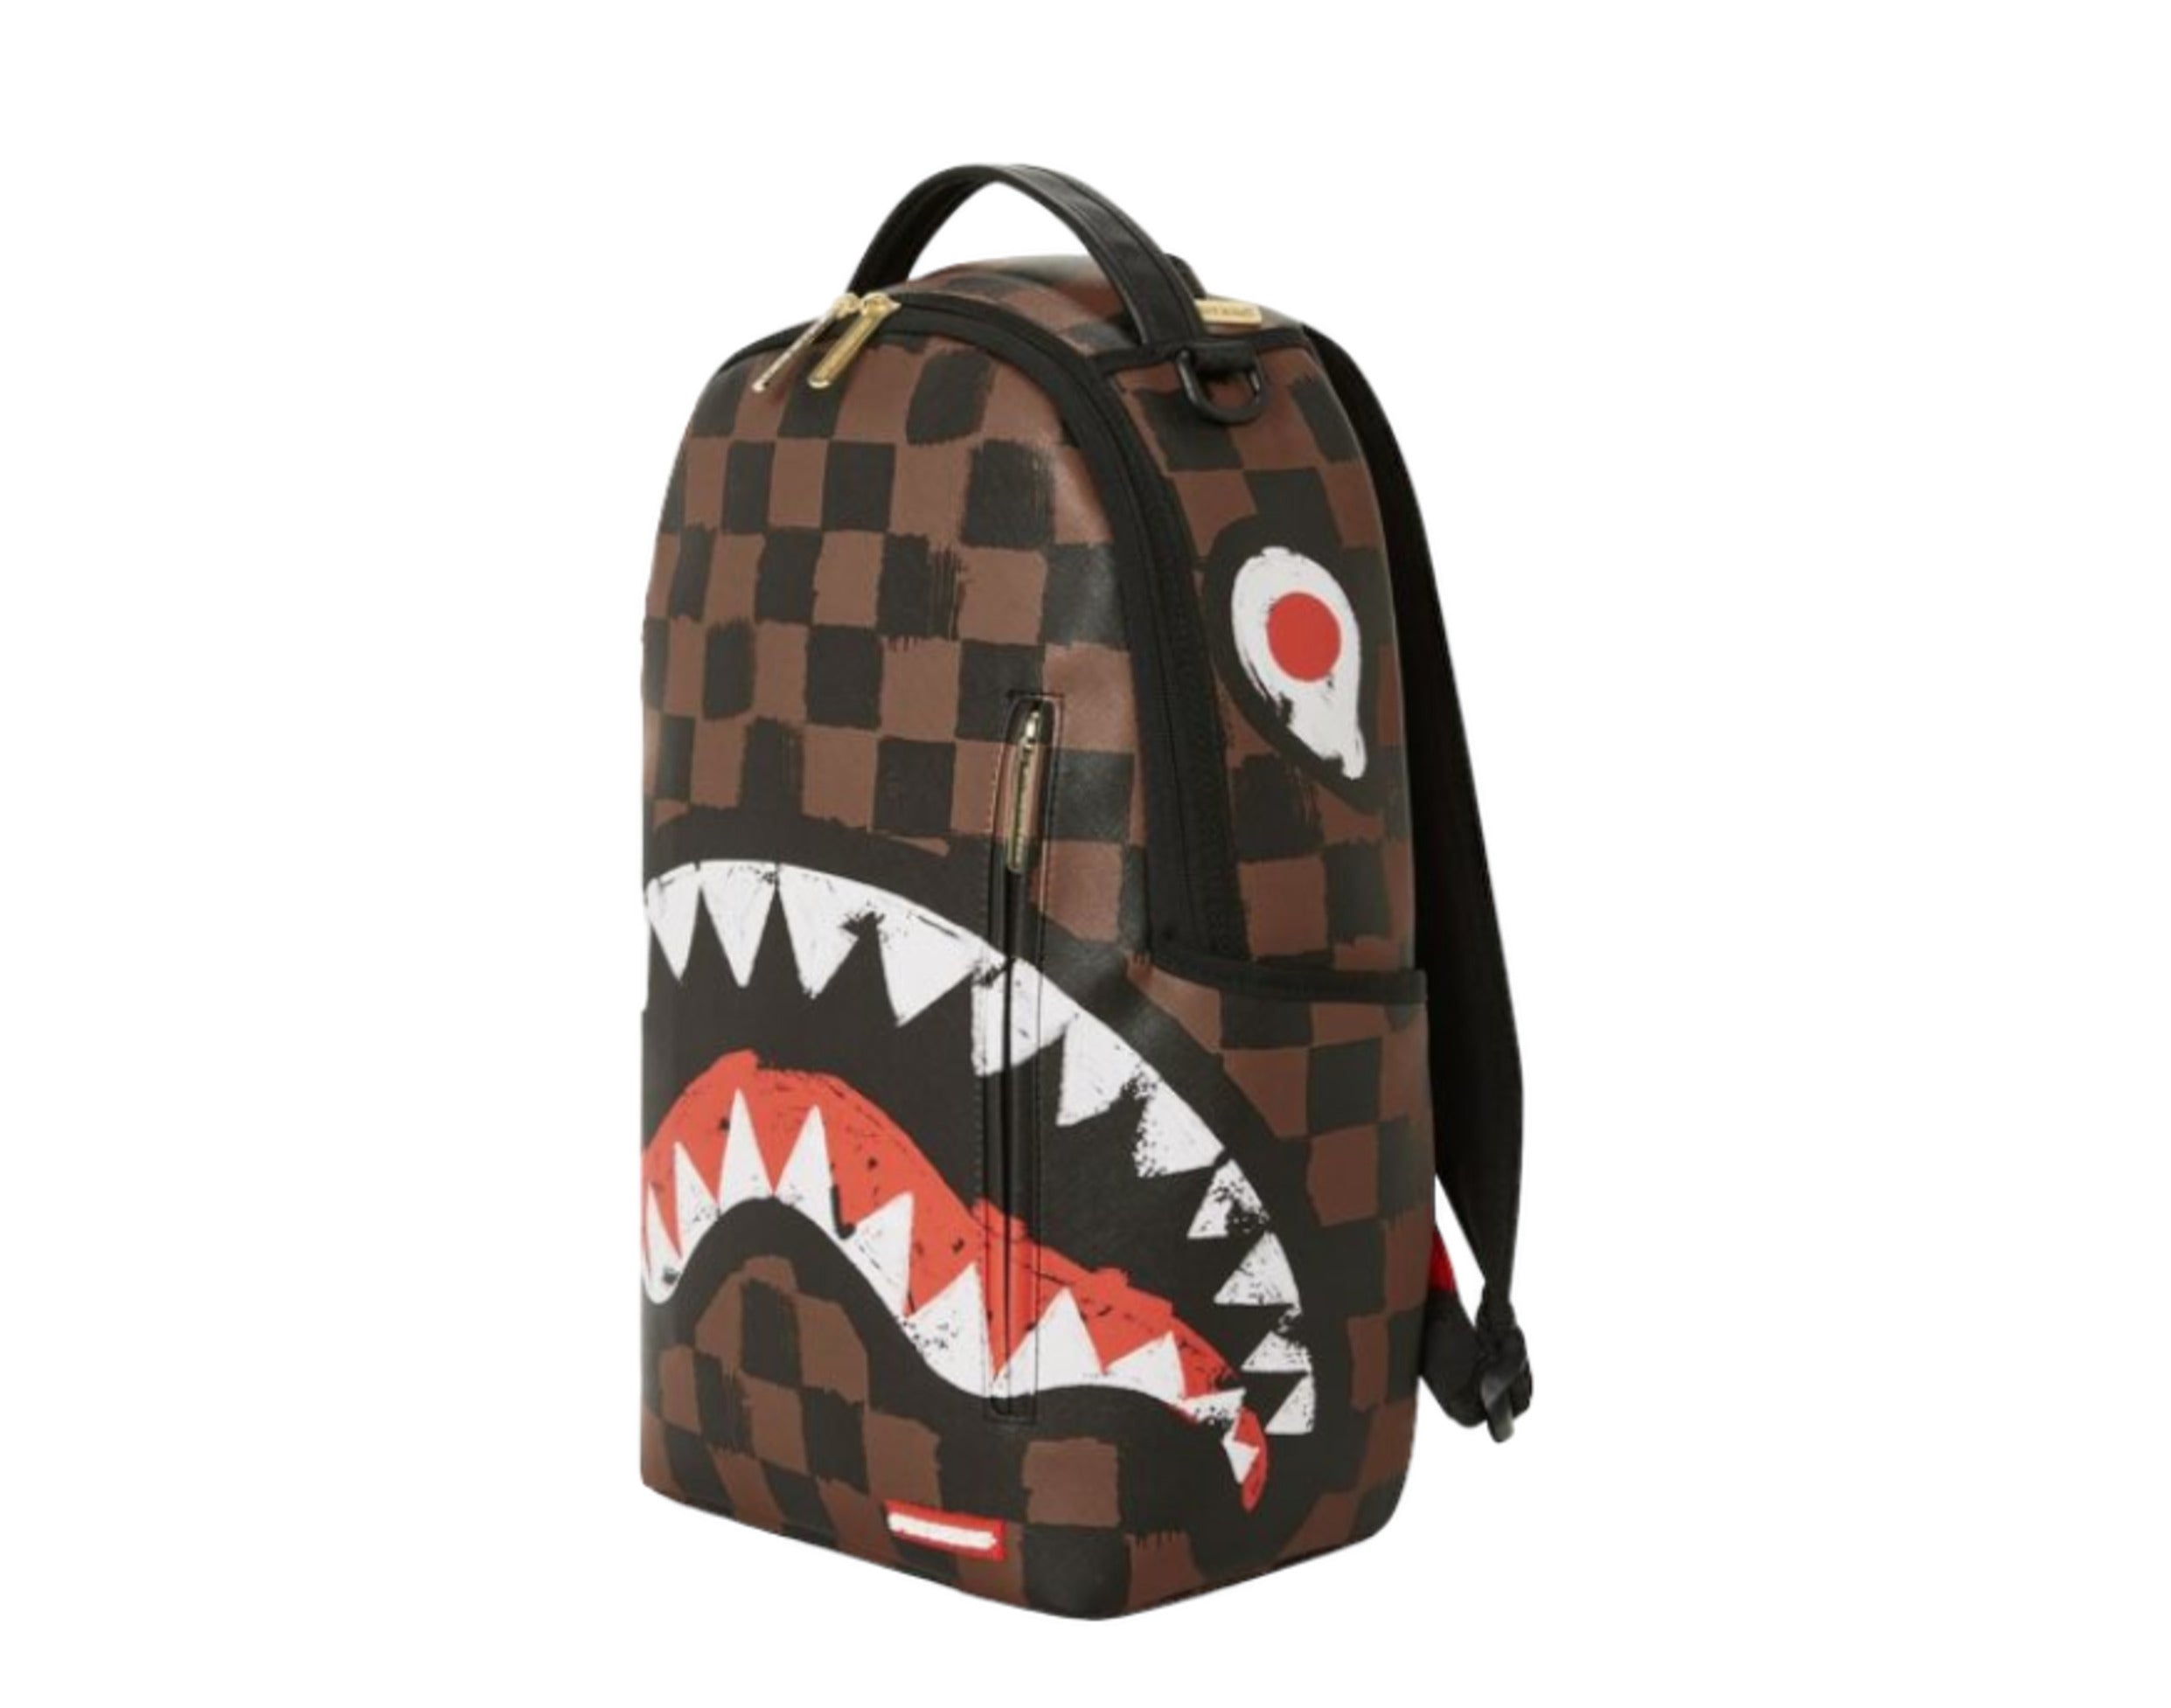 Sharks In Paris Gold Zipper Brown Backpacks Laptop Bag/Backpack